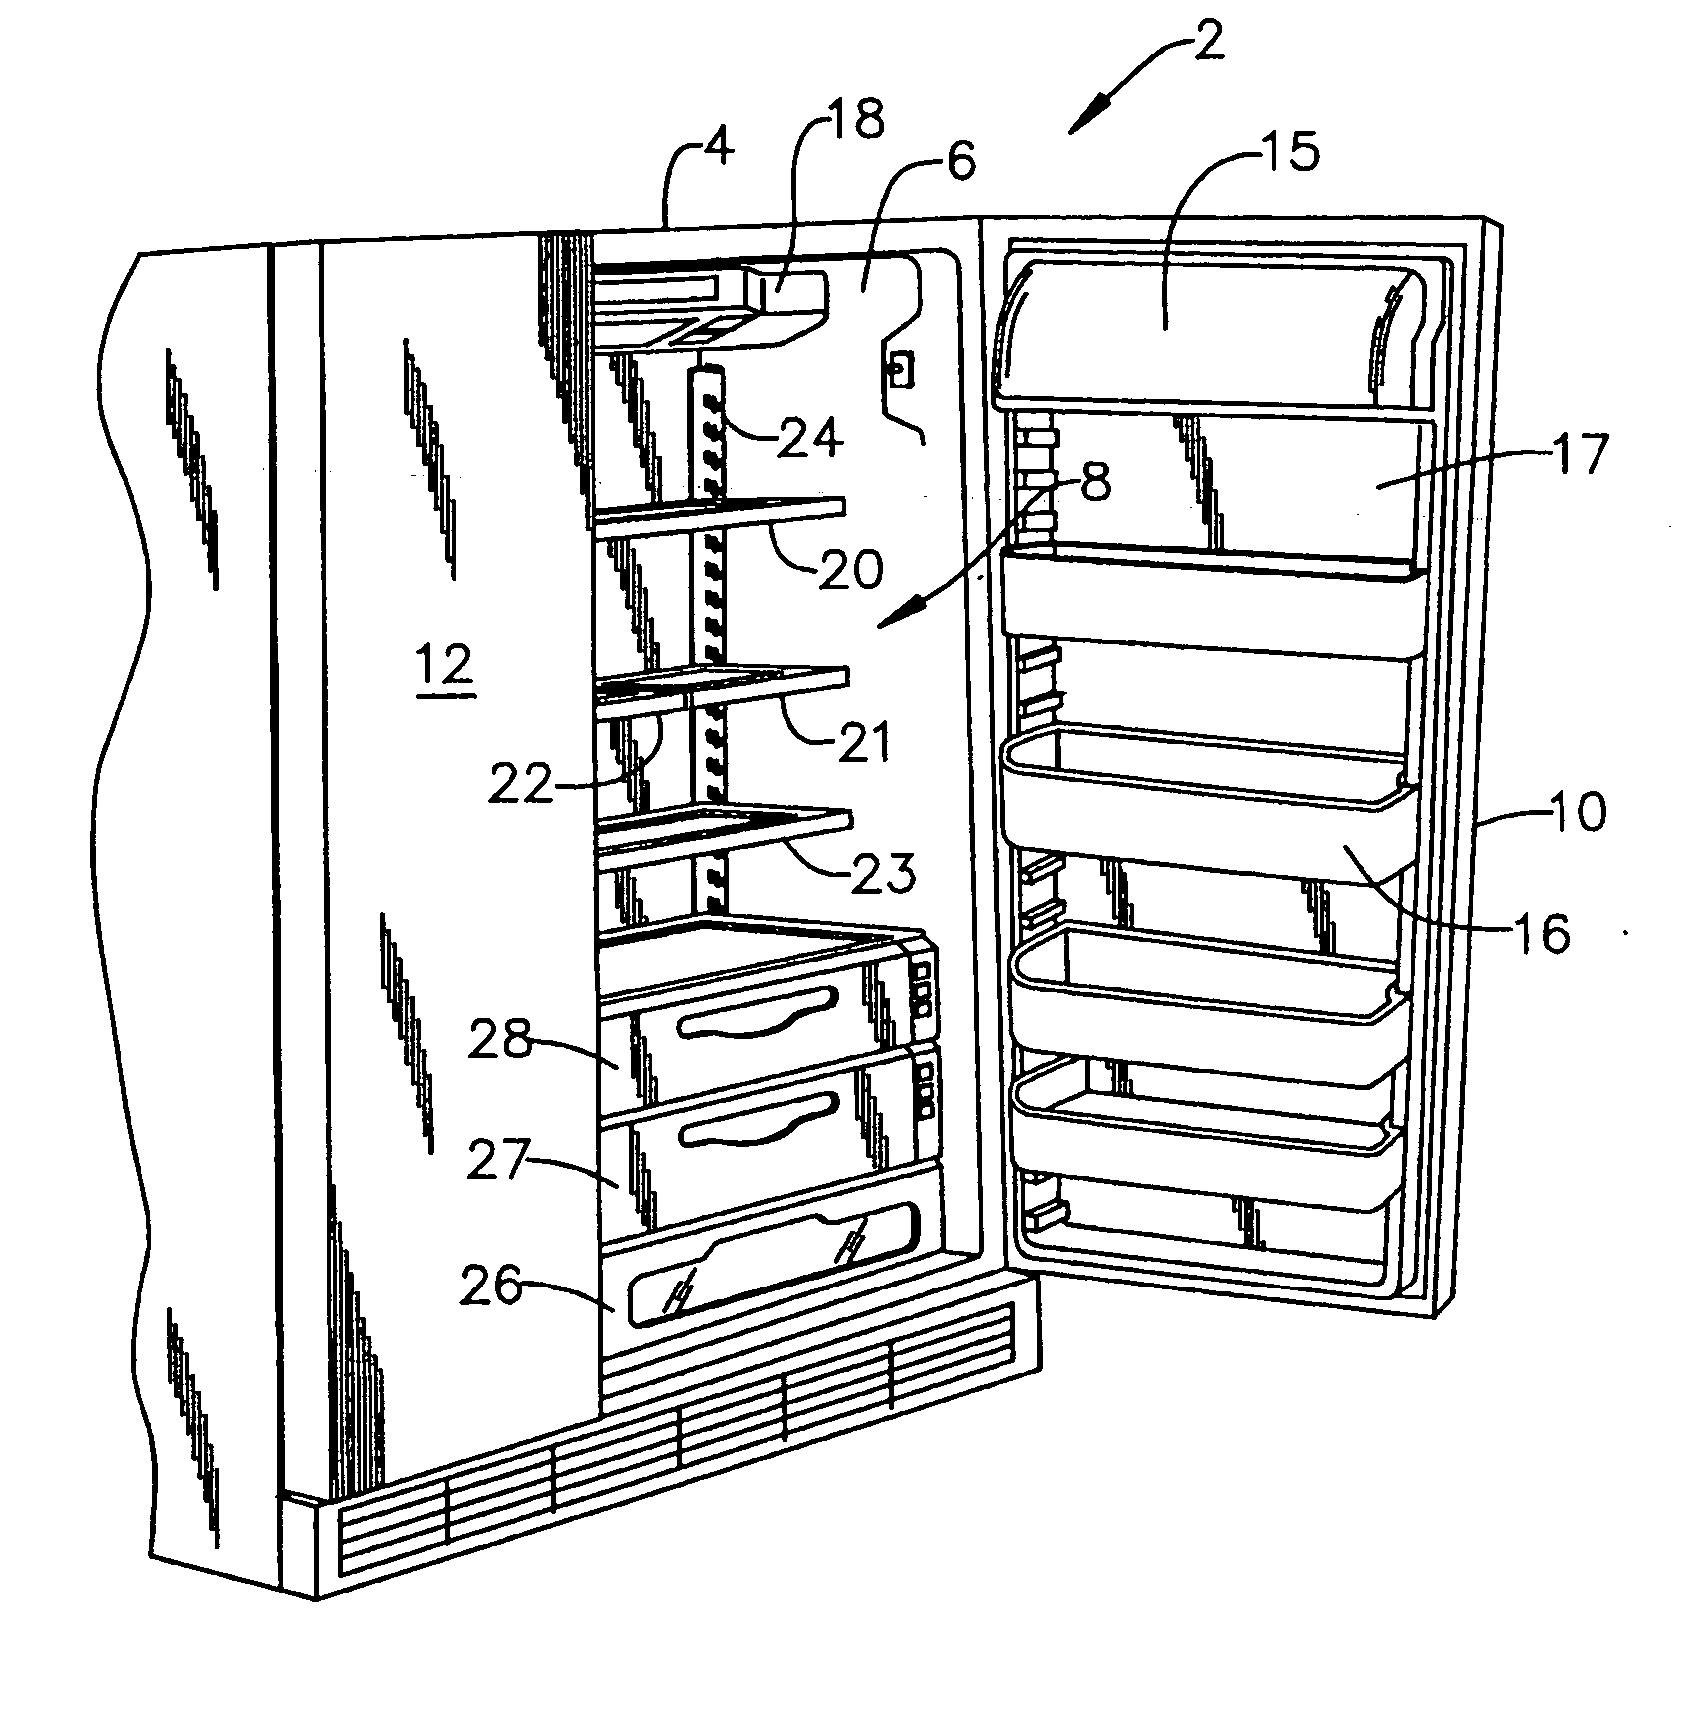 Refrigerator rail system for removably supported side-sliding shelves